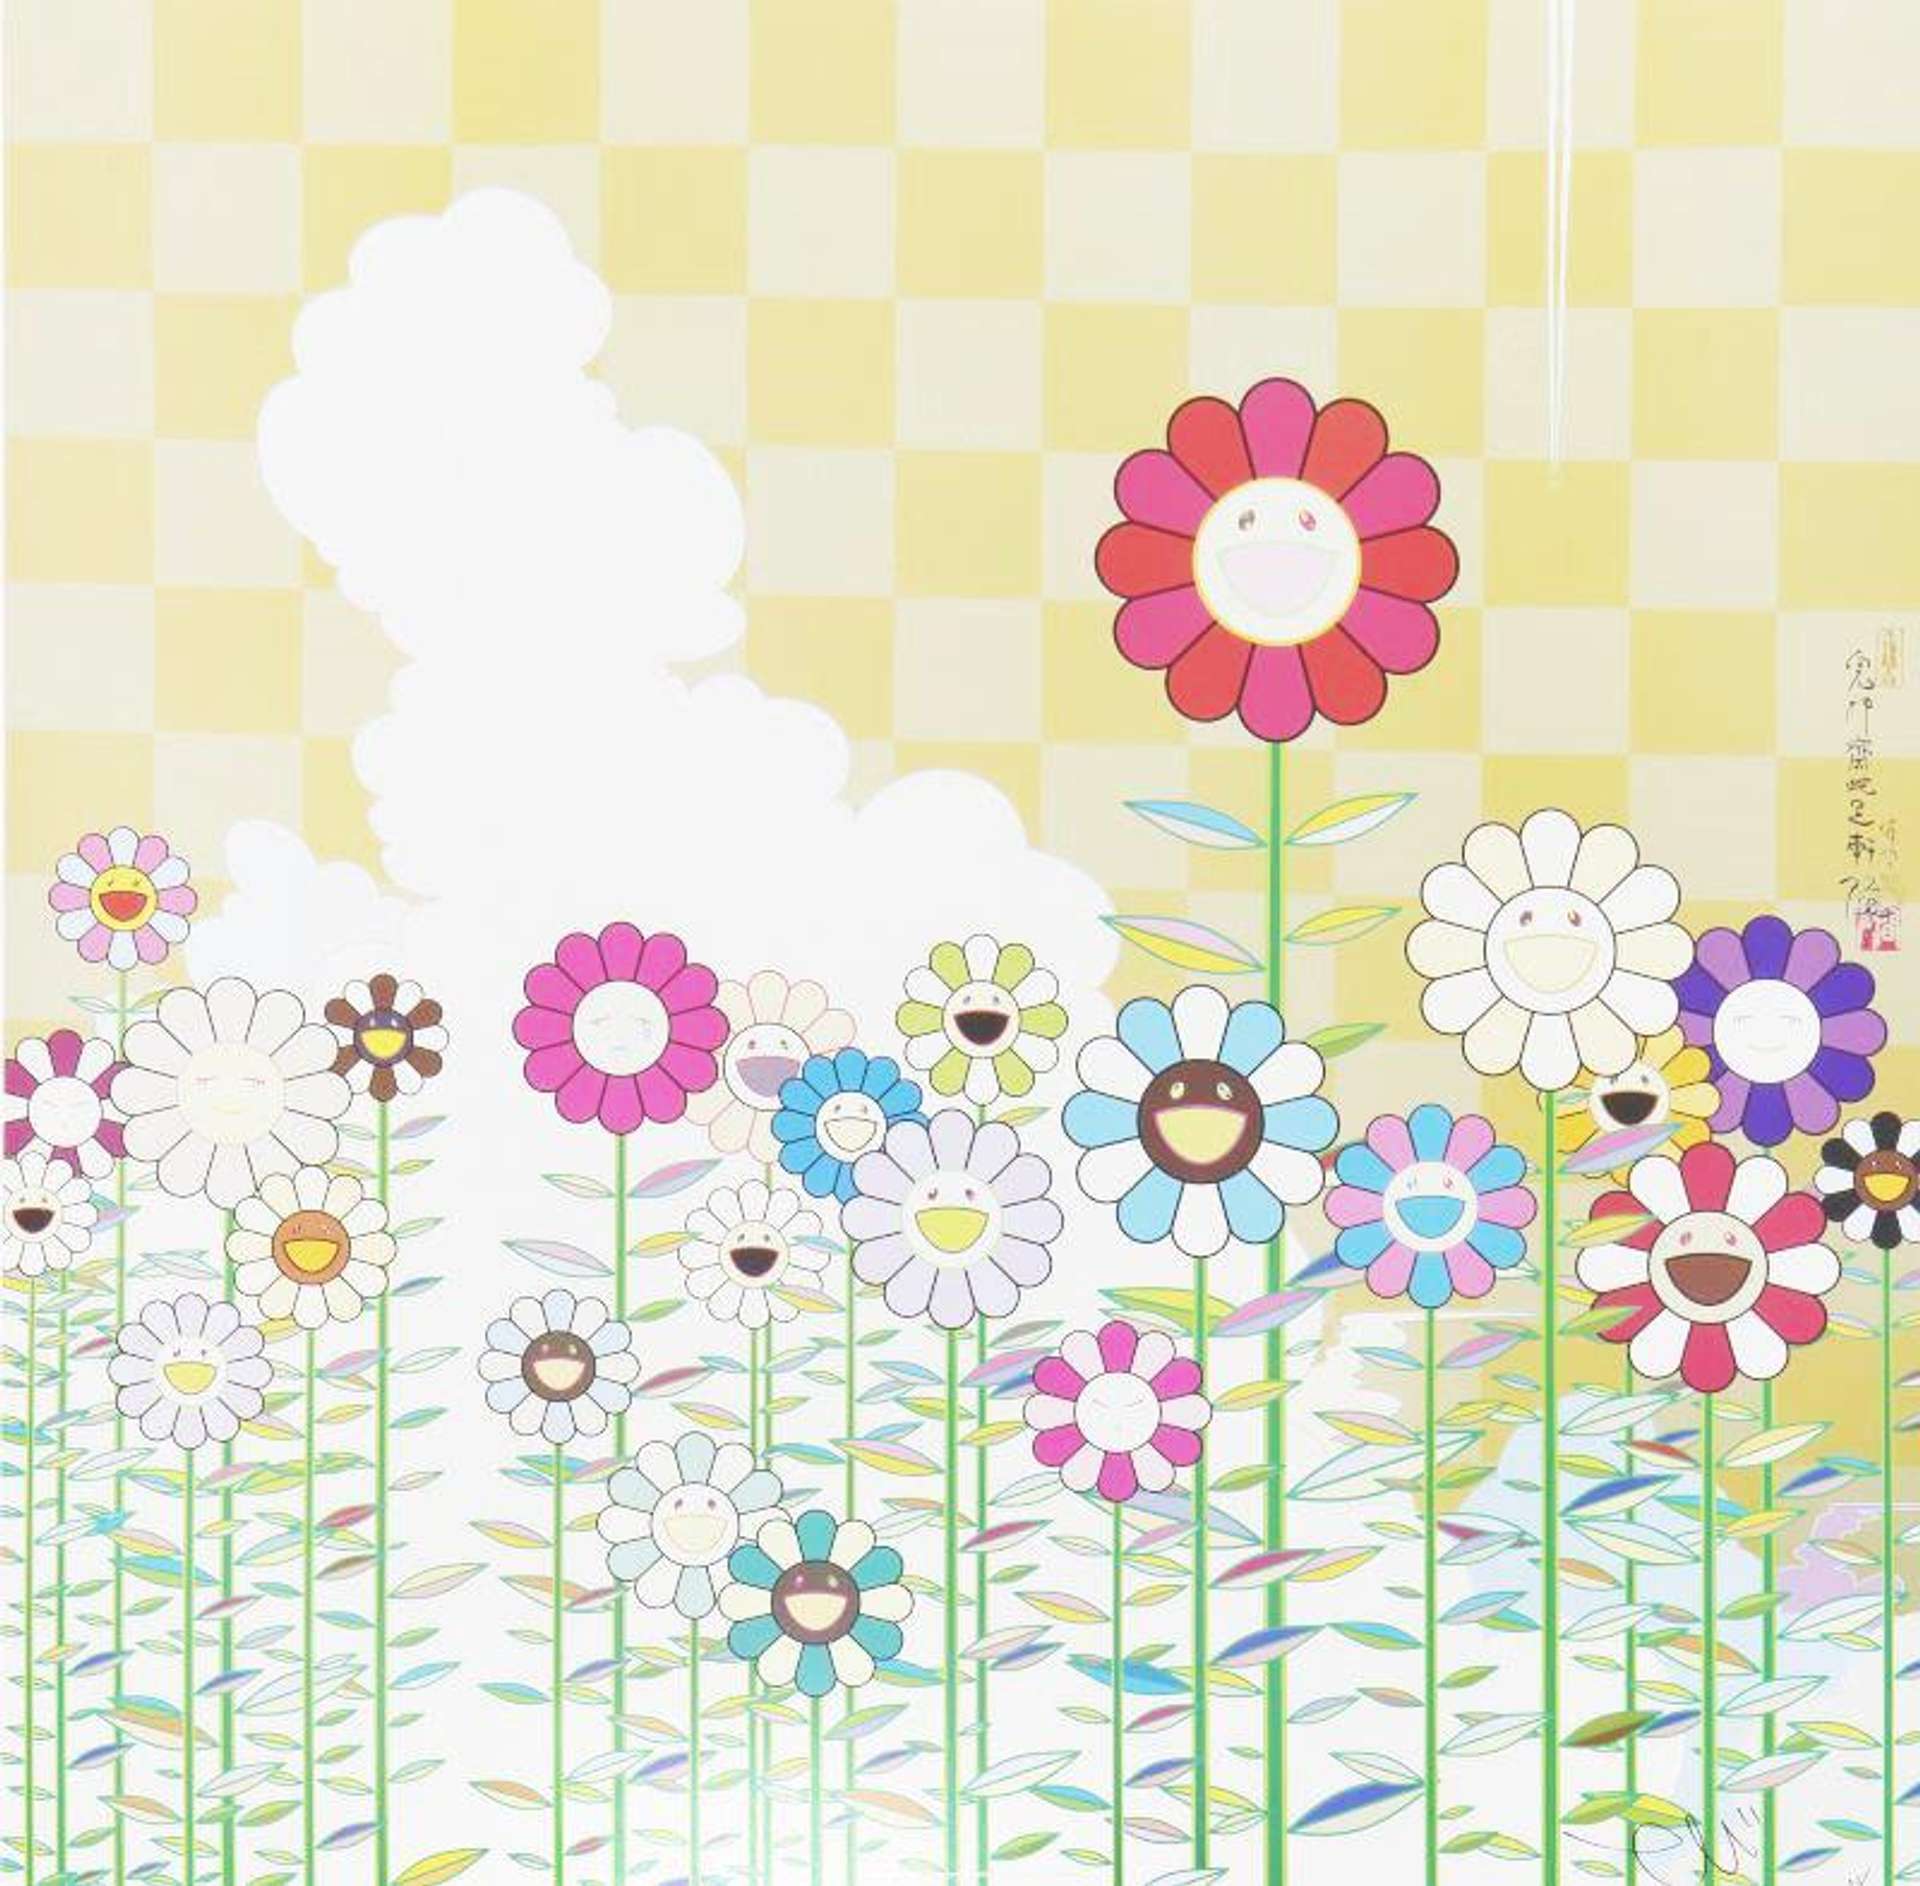 Warm And Sunny - Signed Print by Takashi Murakami 2012 - MyArtBroker